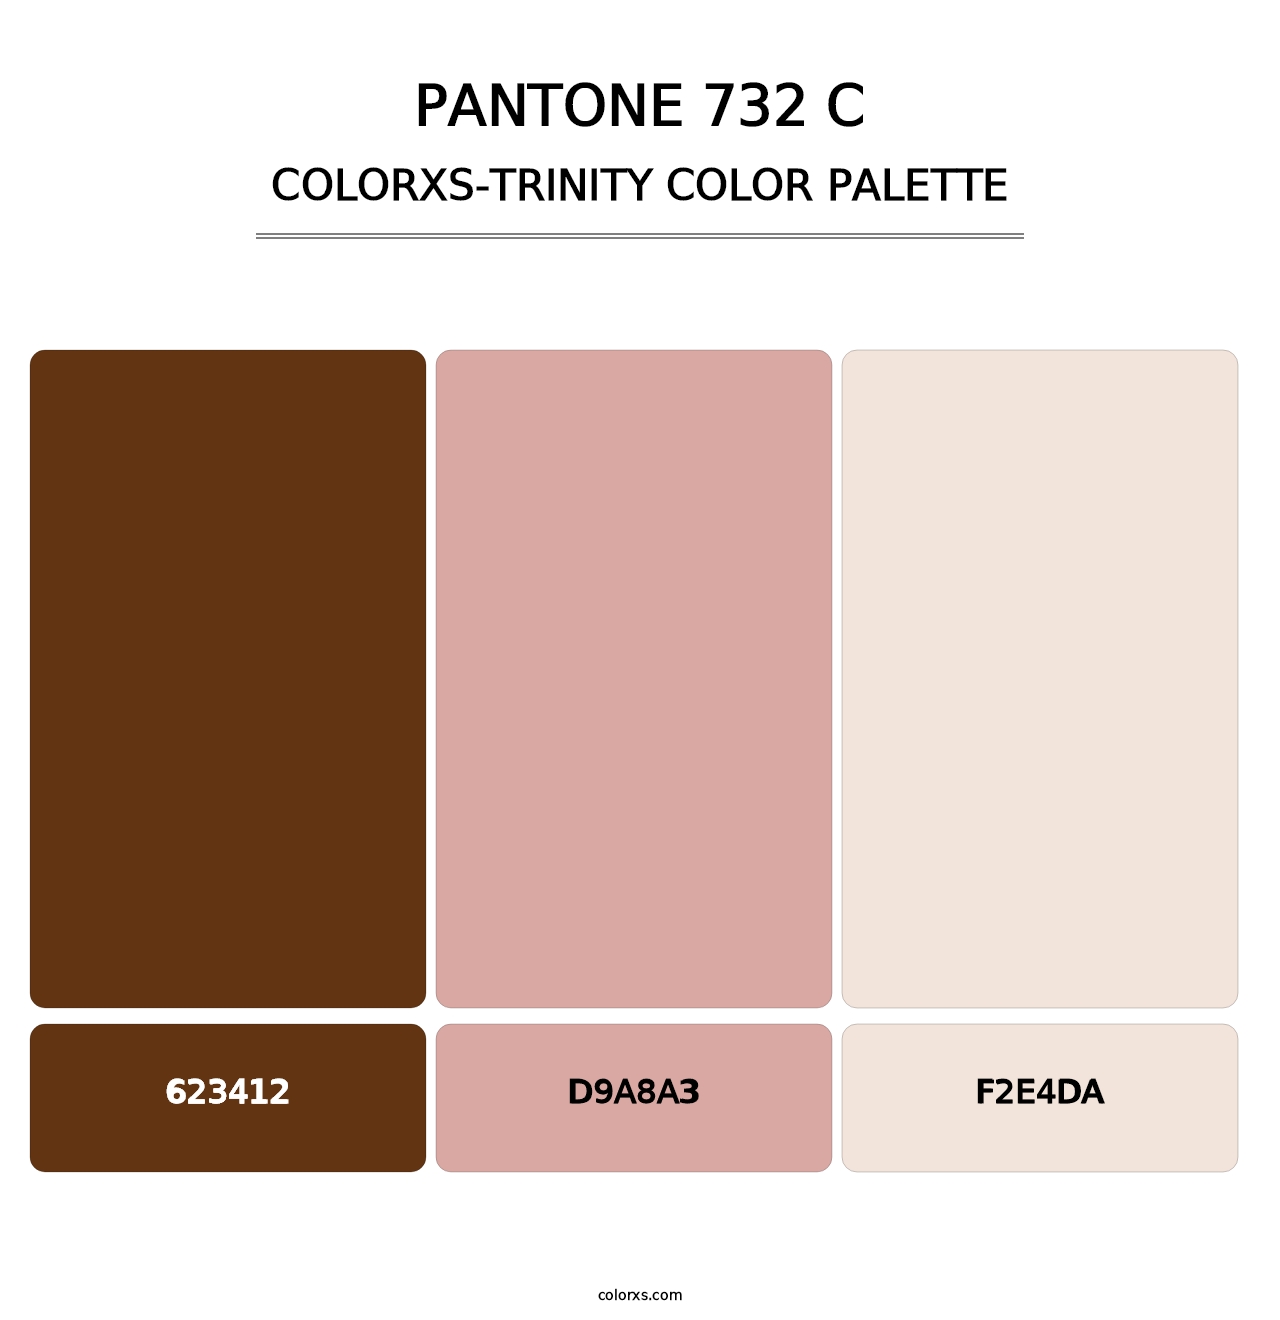 PANTONE 732 C - Colorxs Trinity Palette